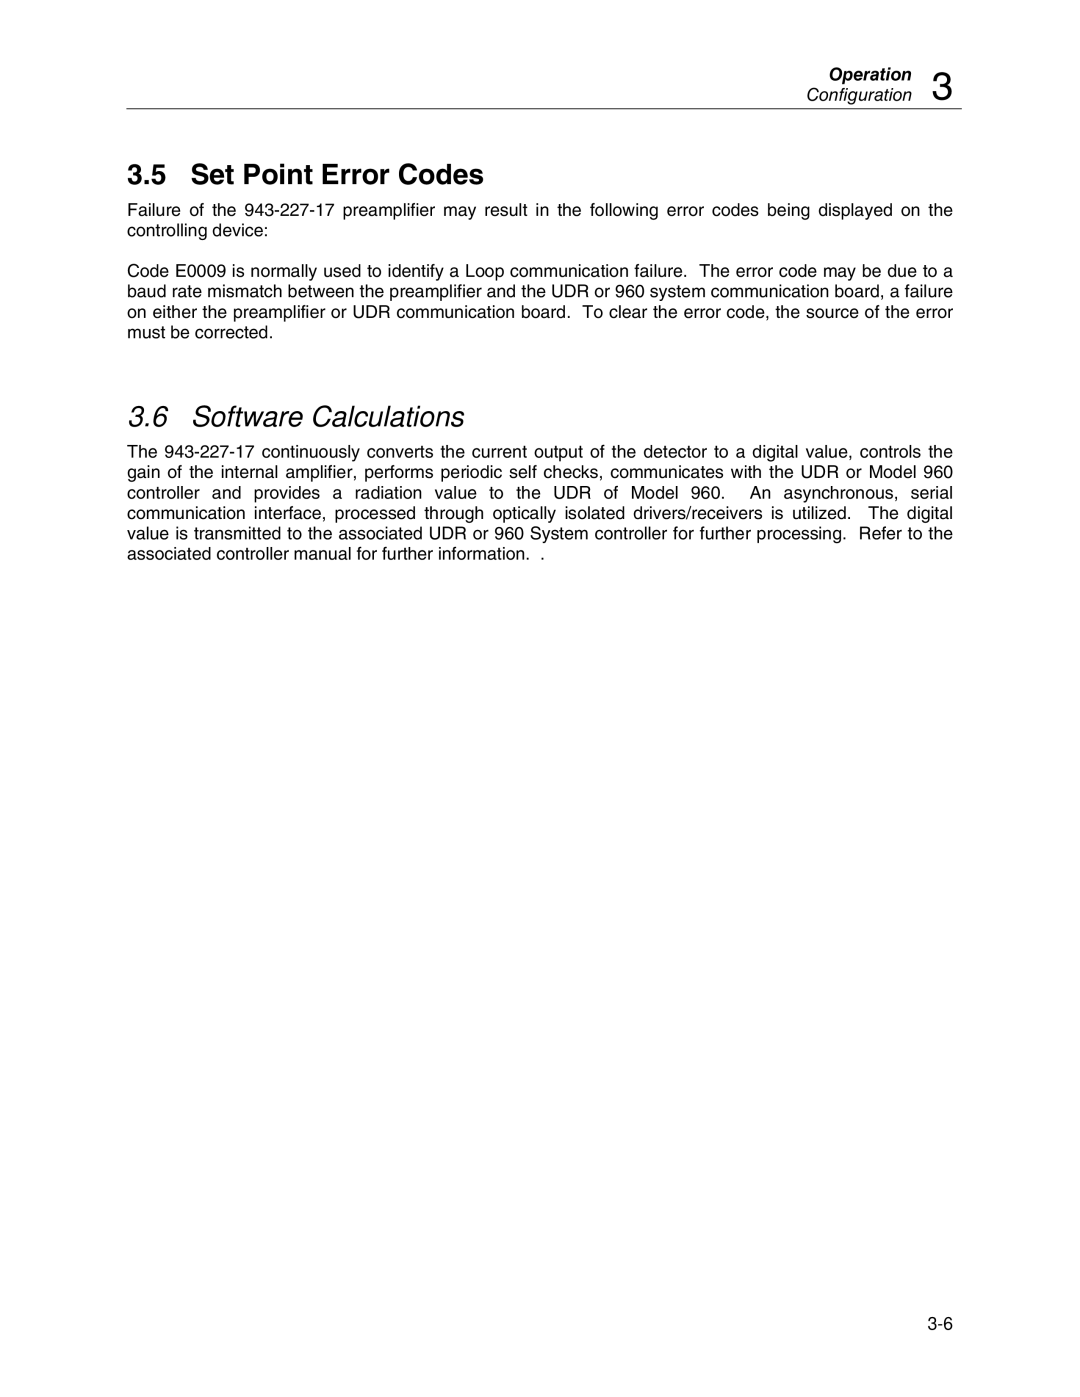 Fluke 943-227-15, 943-27 manual Set Point Error Codes, Software Calculations 